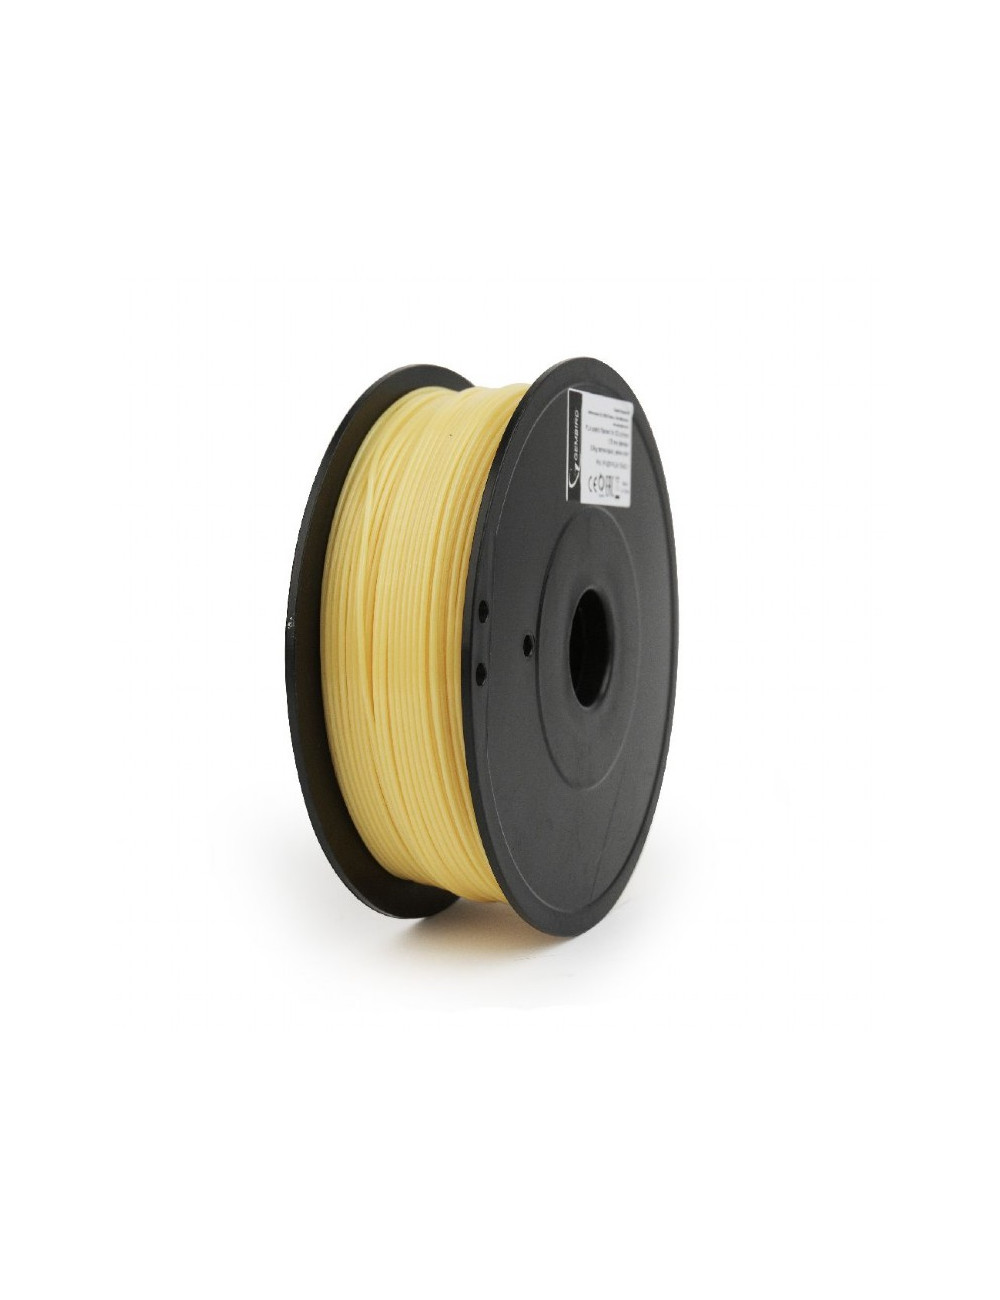 Flashforge PLA-PLUS Filament 1.75 mm diameter, 1kg/spool, Yellow